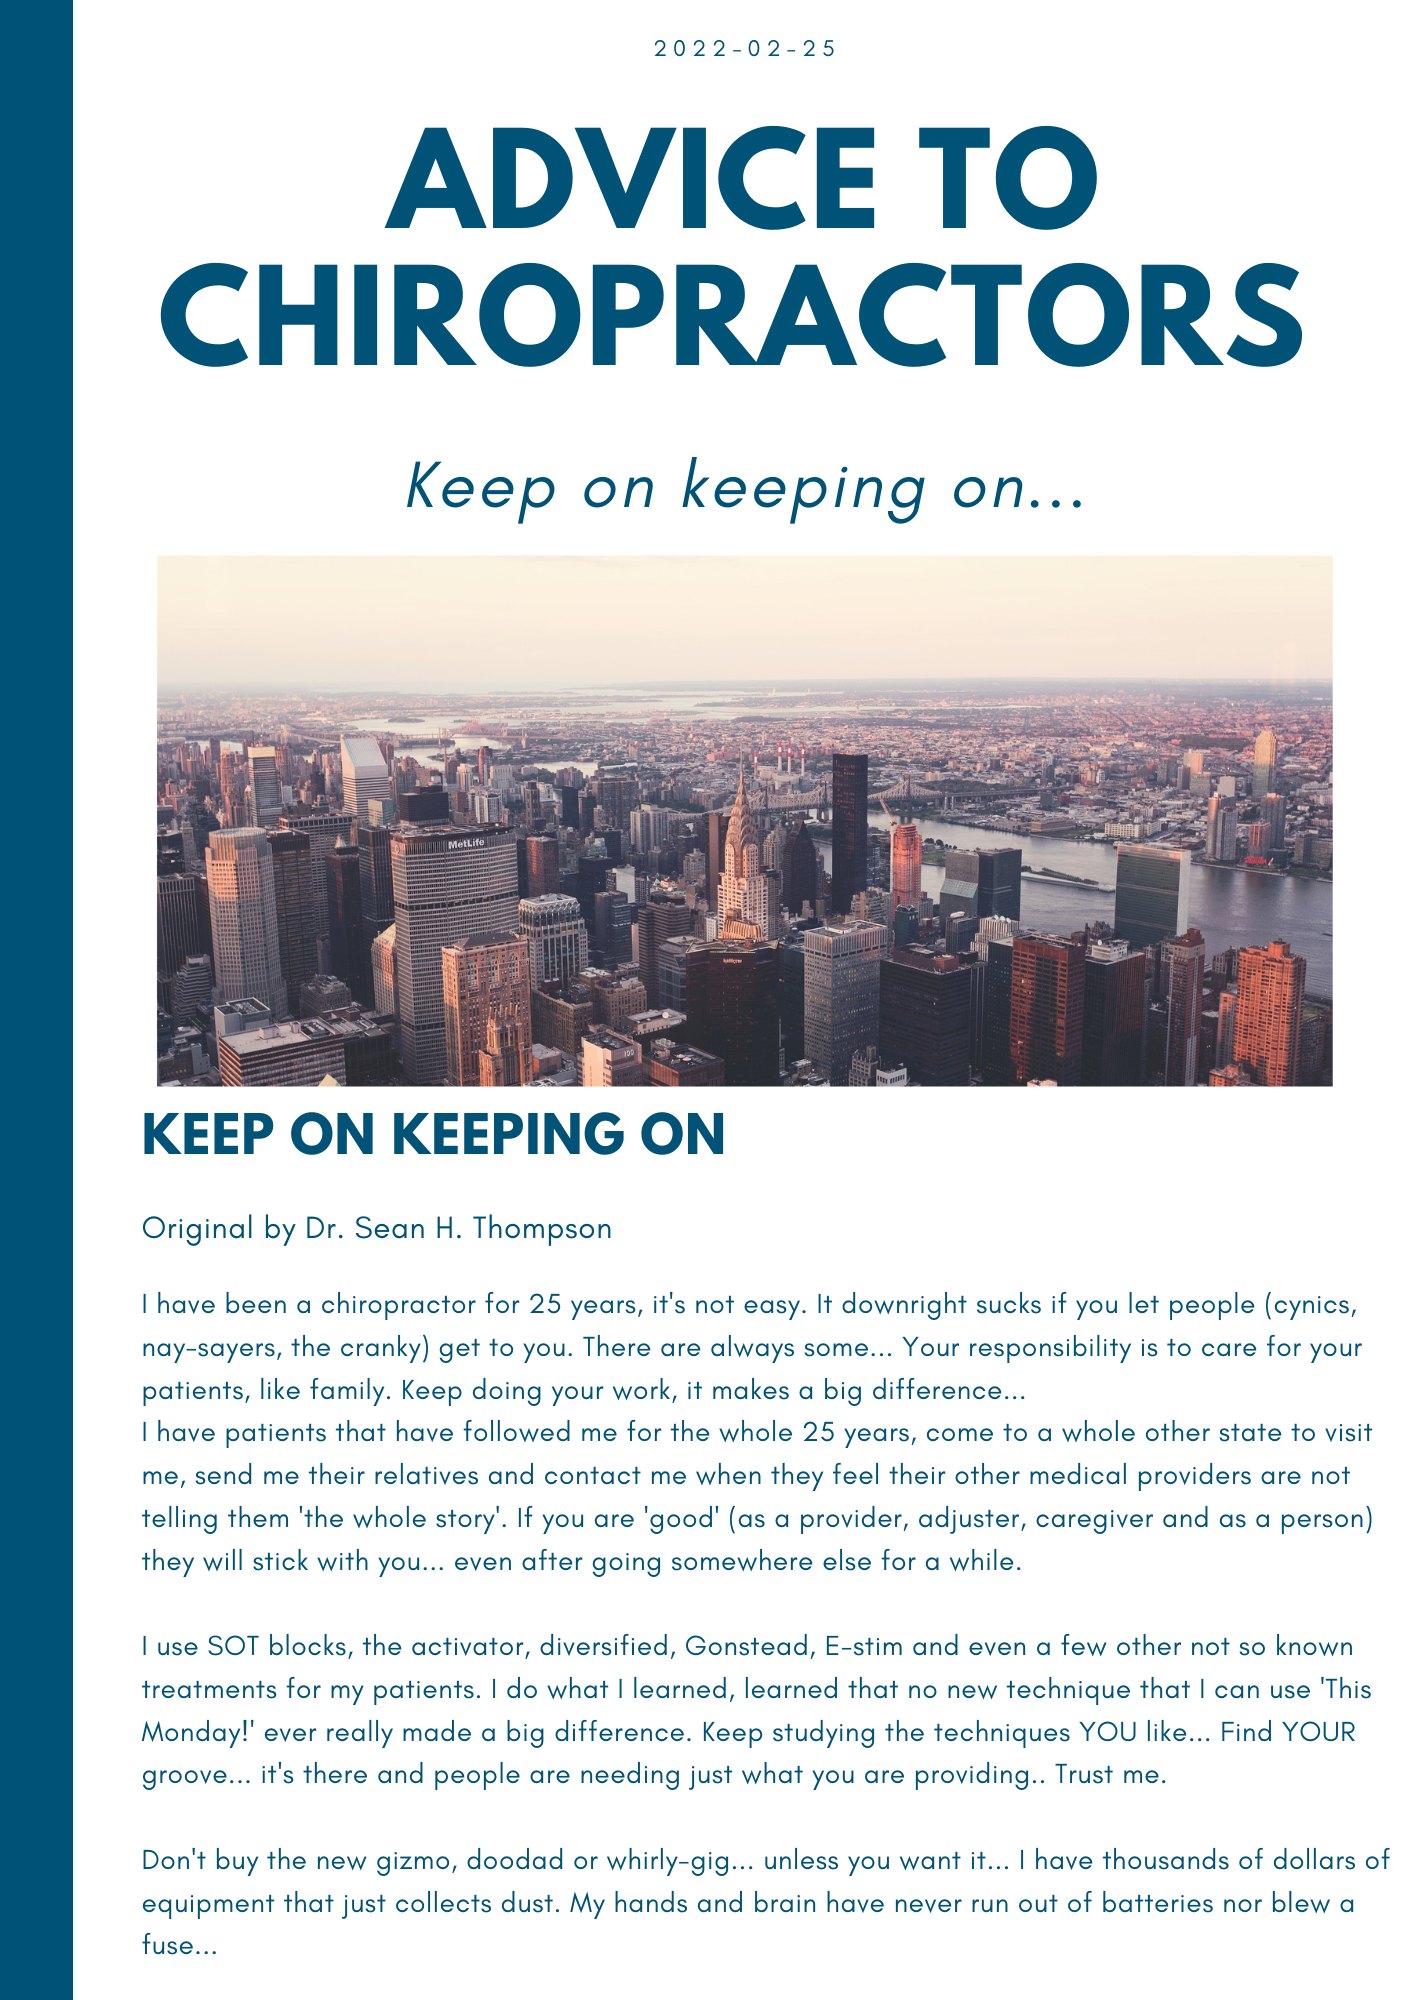 Advice to chiropractors